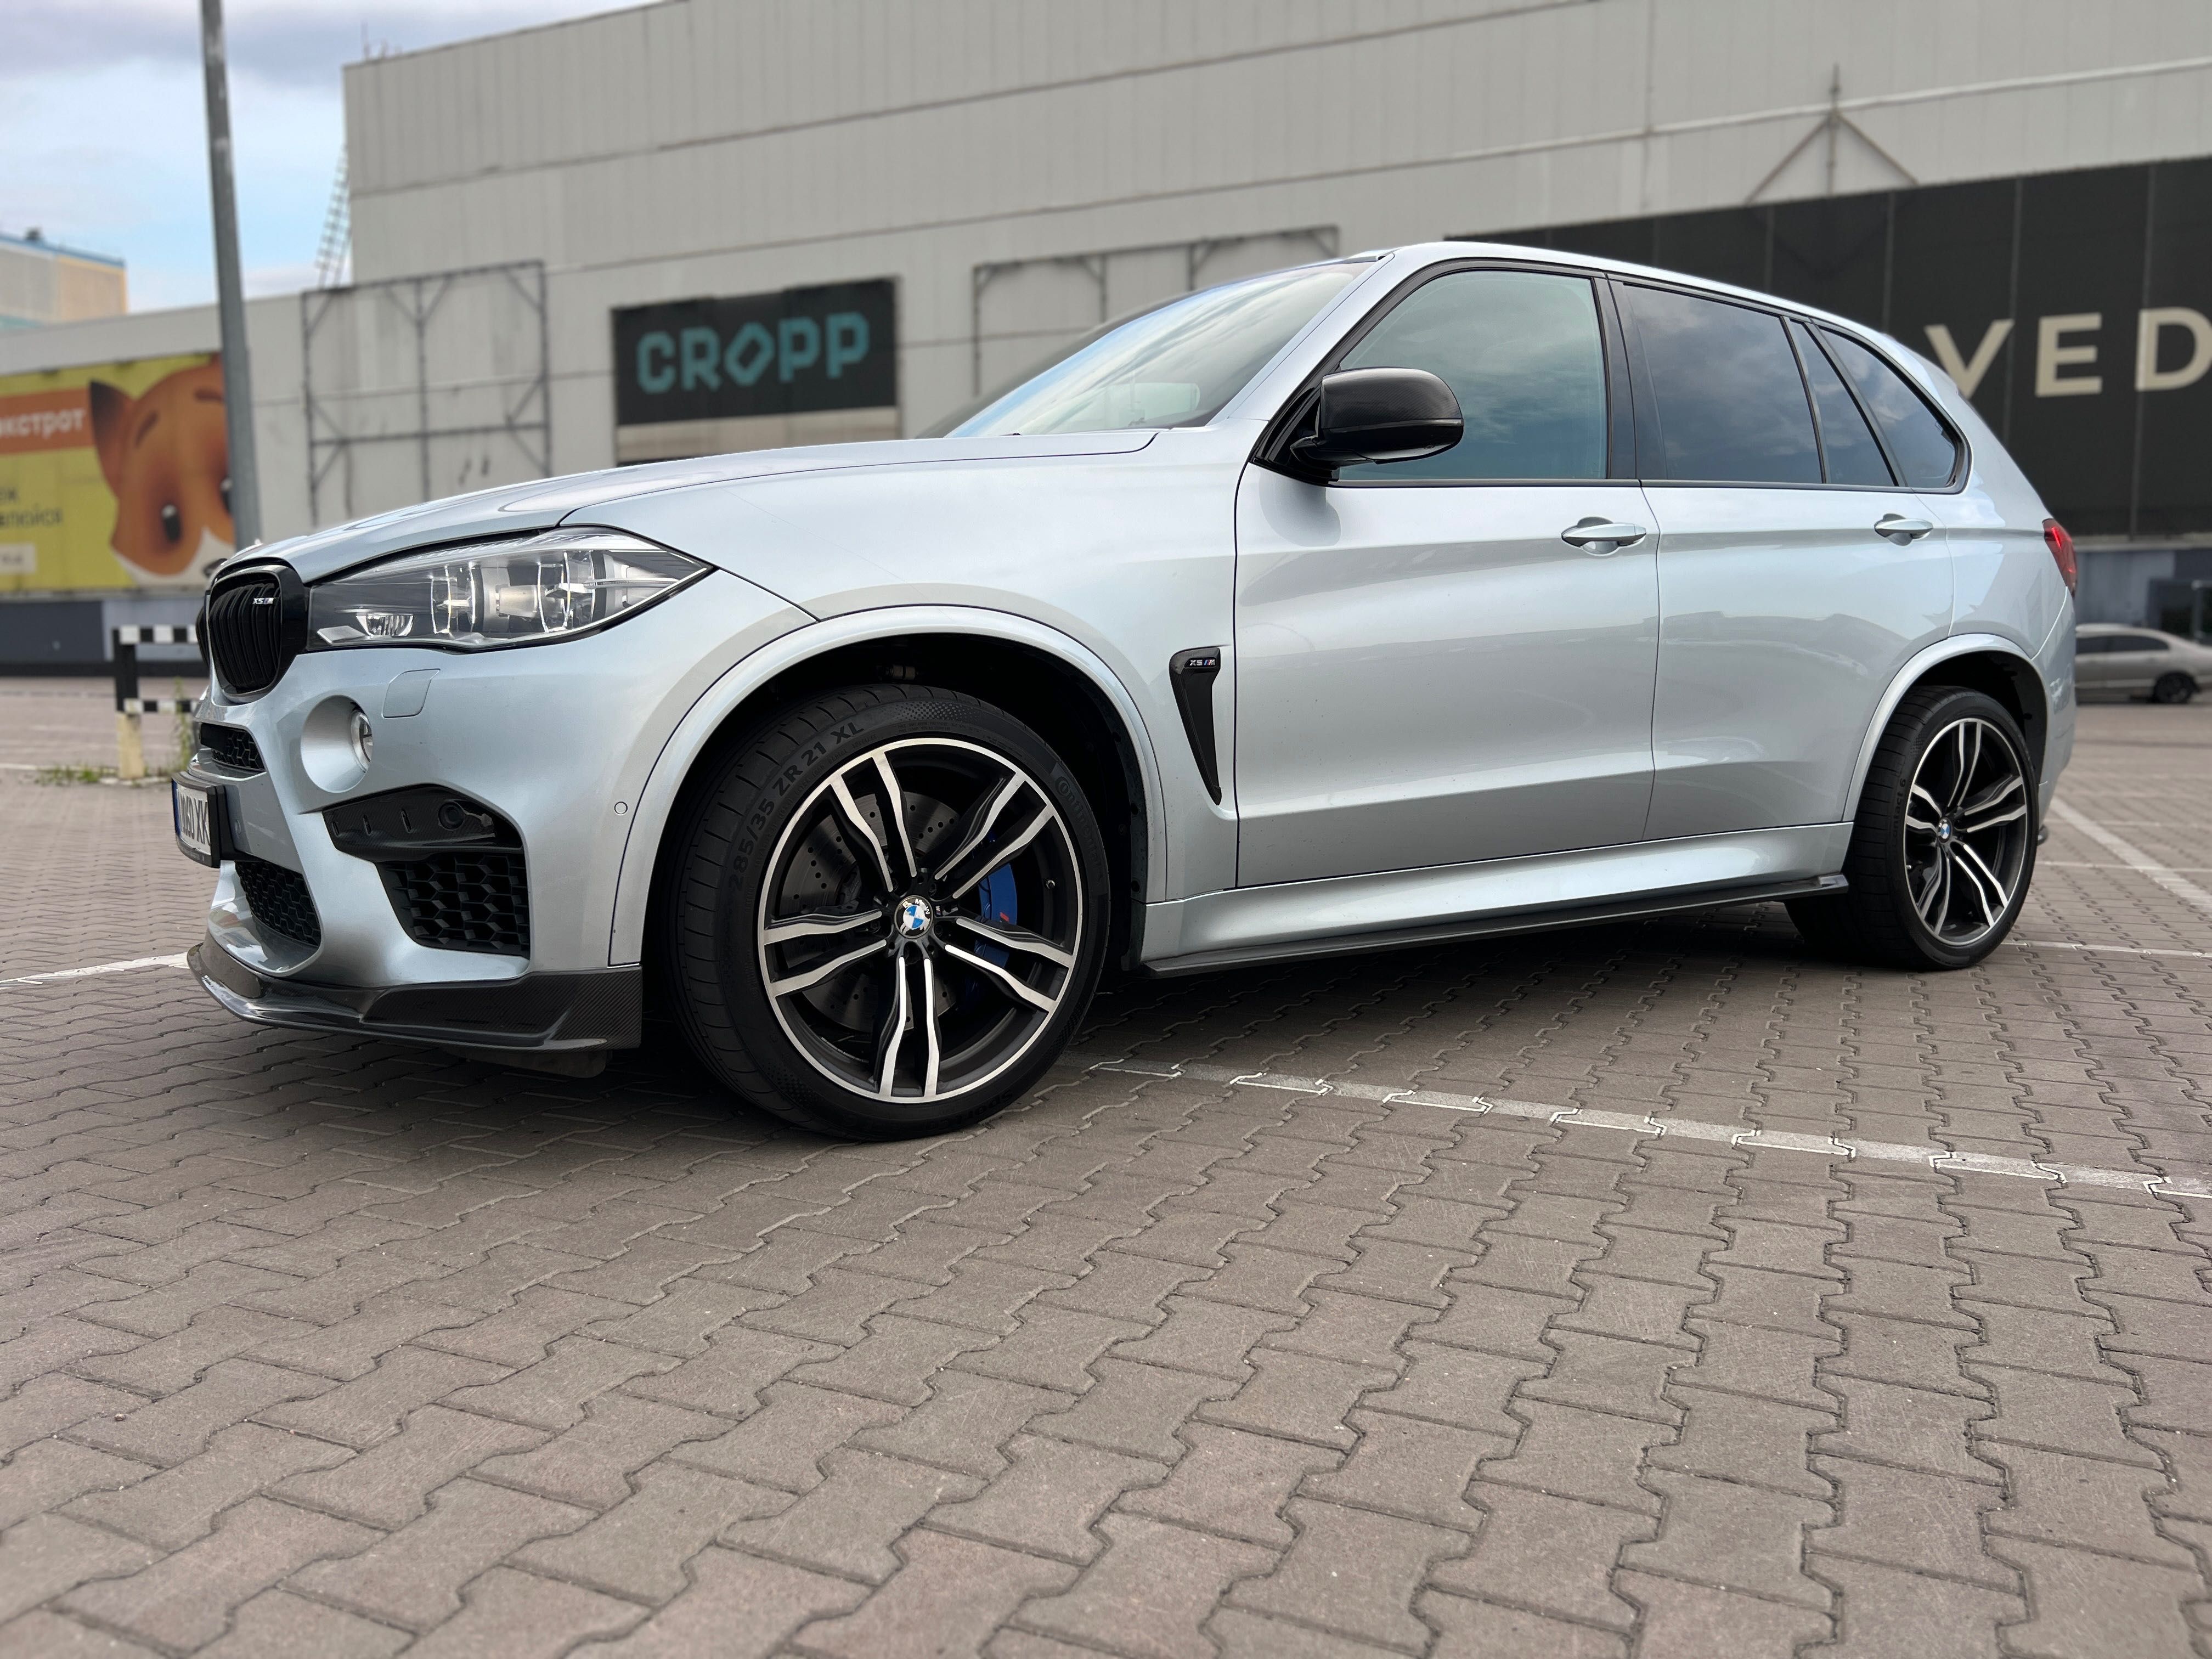 Продам BMW X5M, 2016